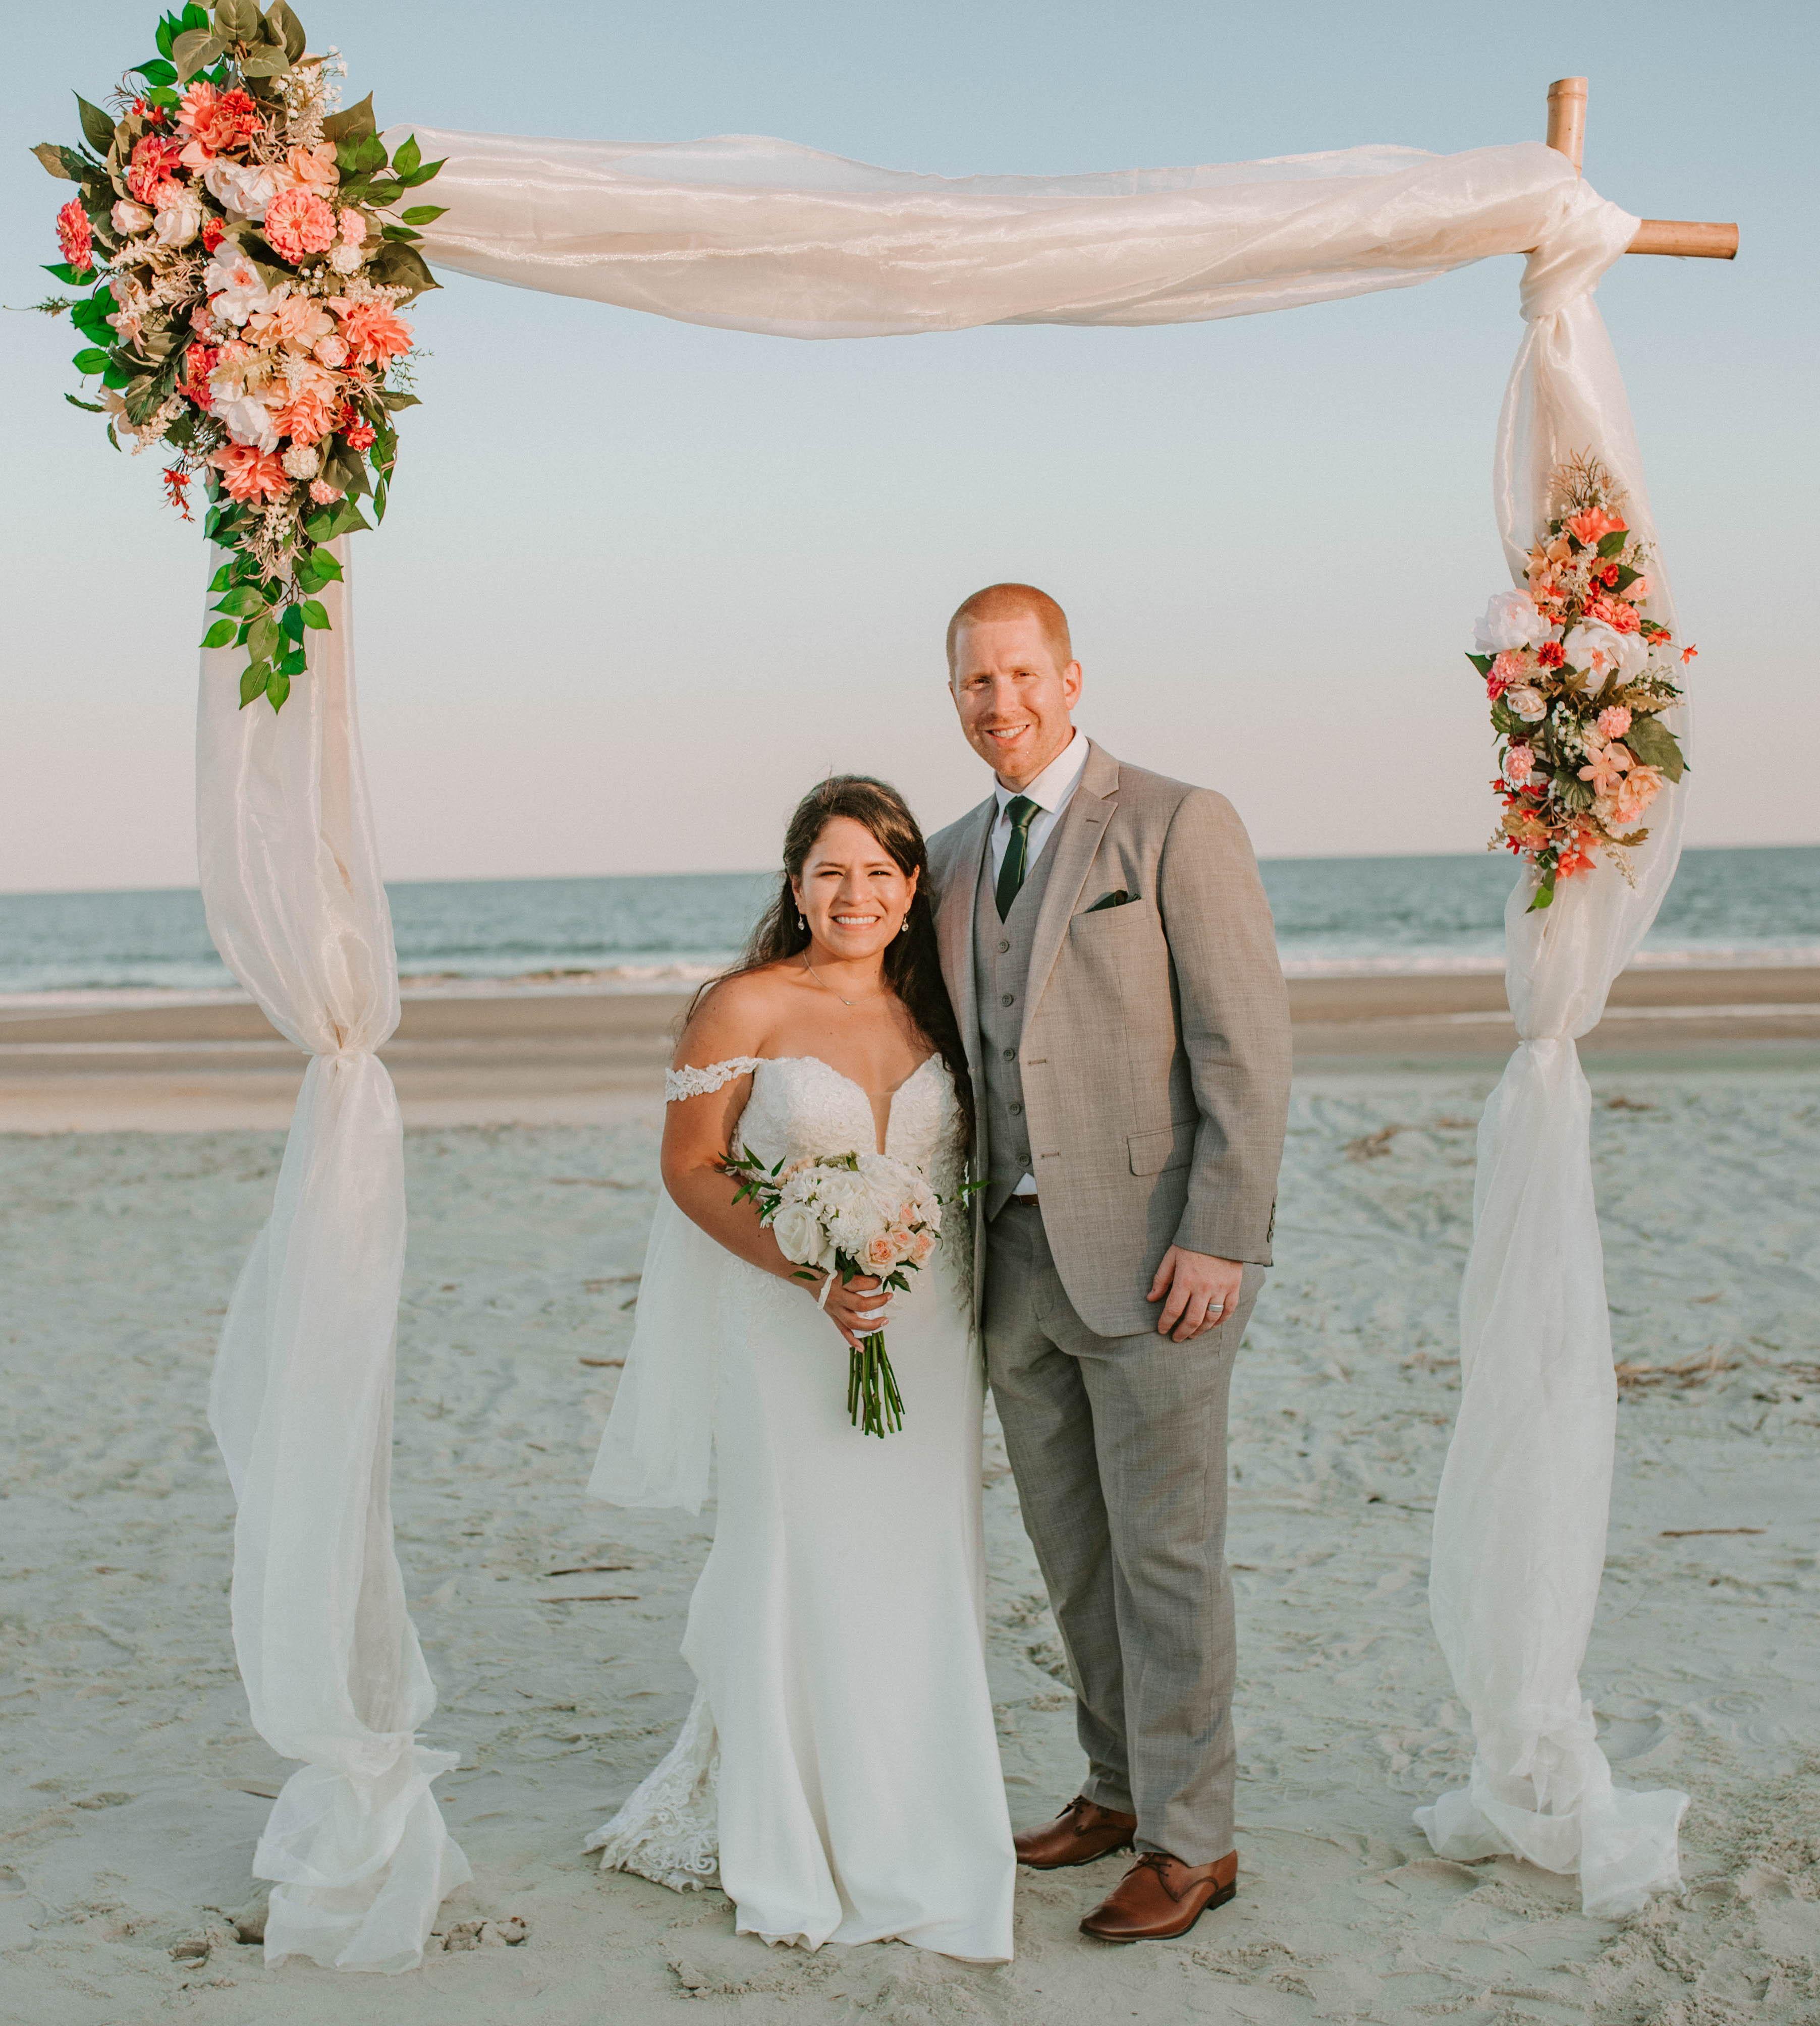 The Wedding Website of Emily Velasquez and Aaron Giese